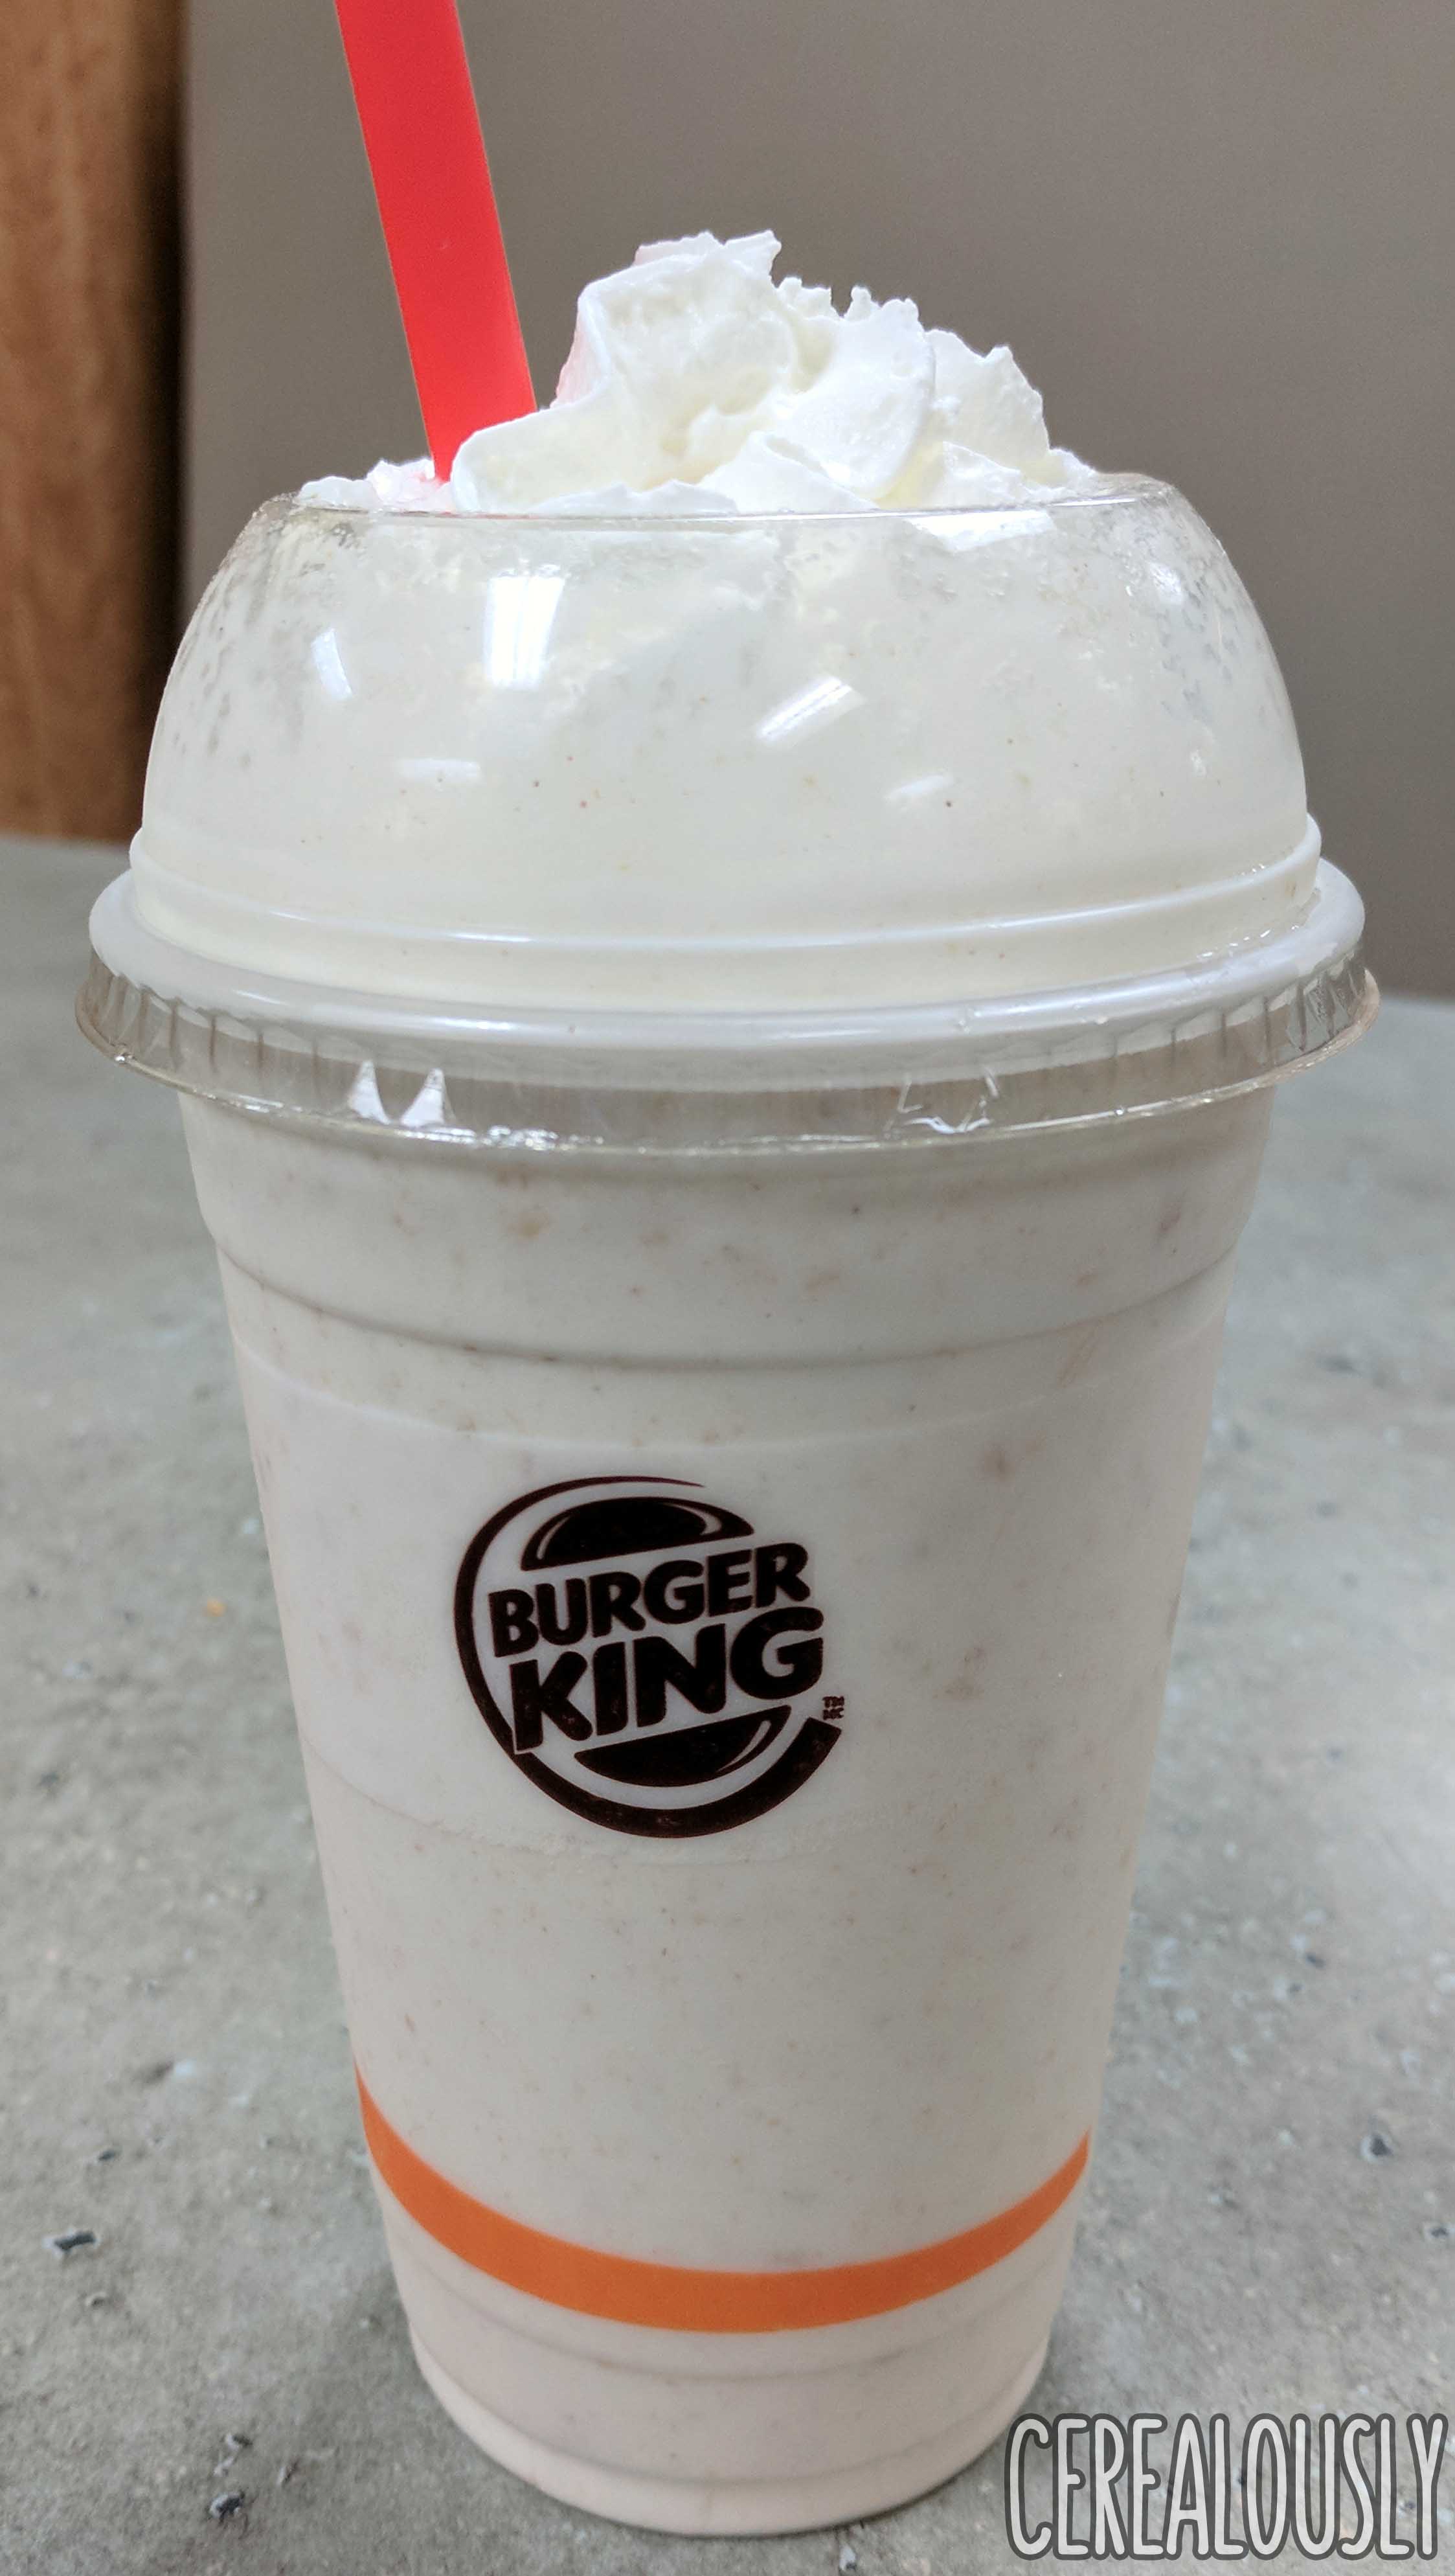 Does Burger King Have Milkshakes? Dear Adam Smith